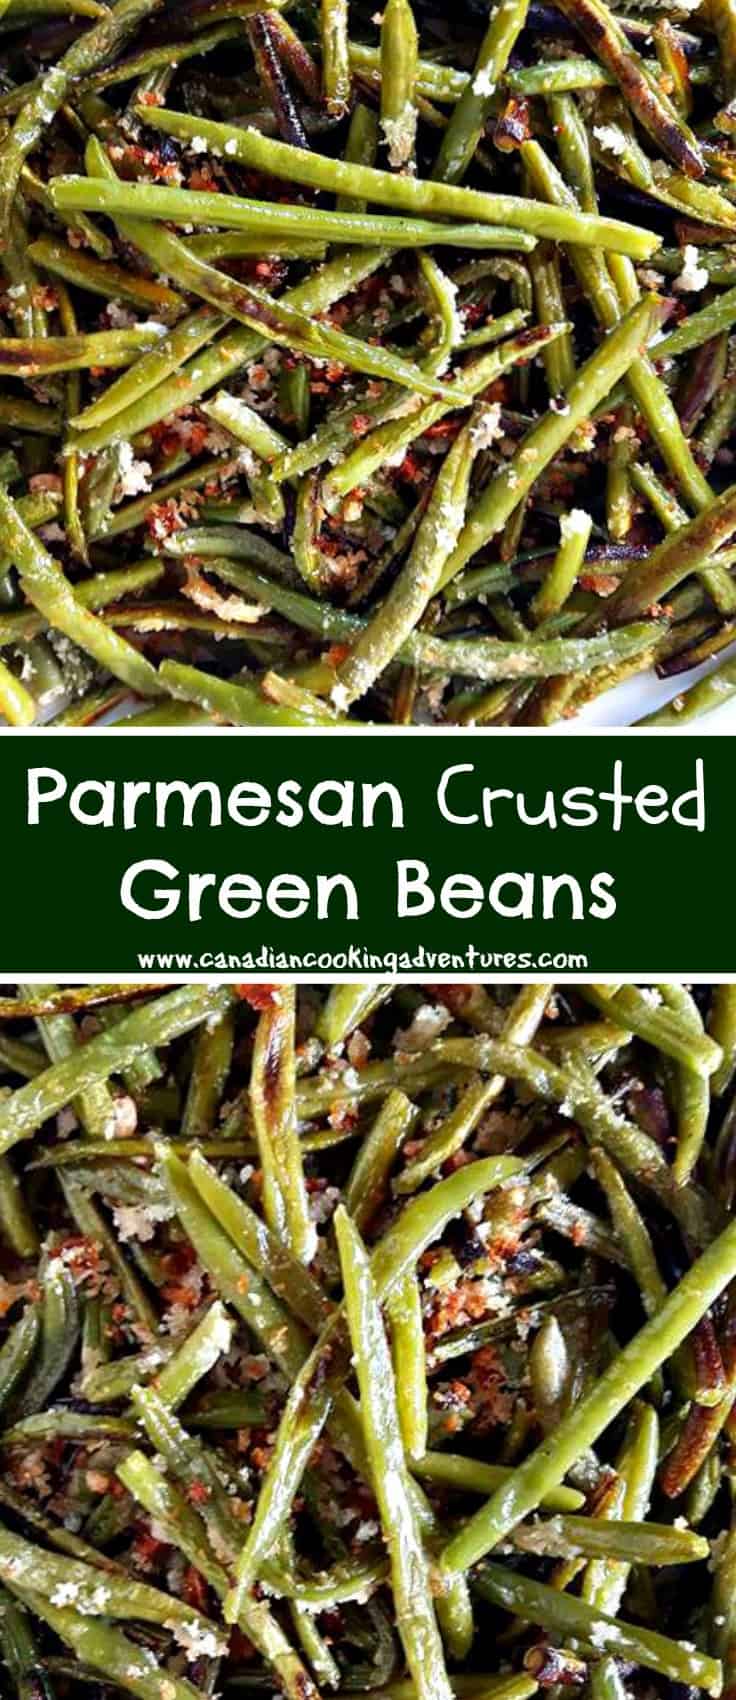 Parmesan baked green beans